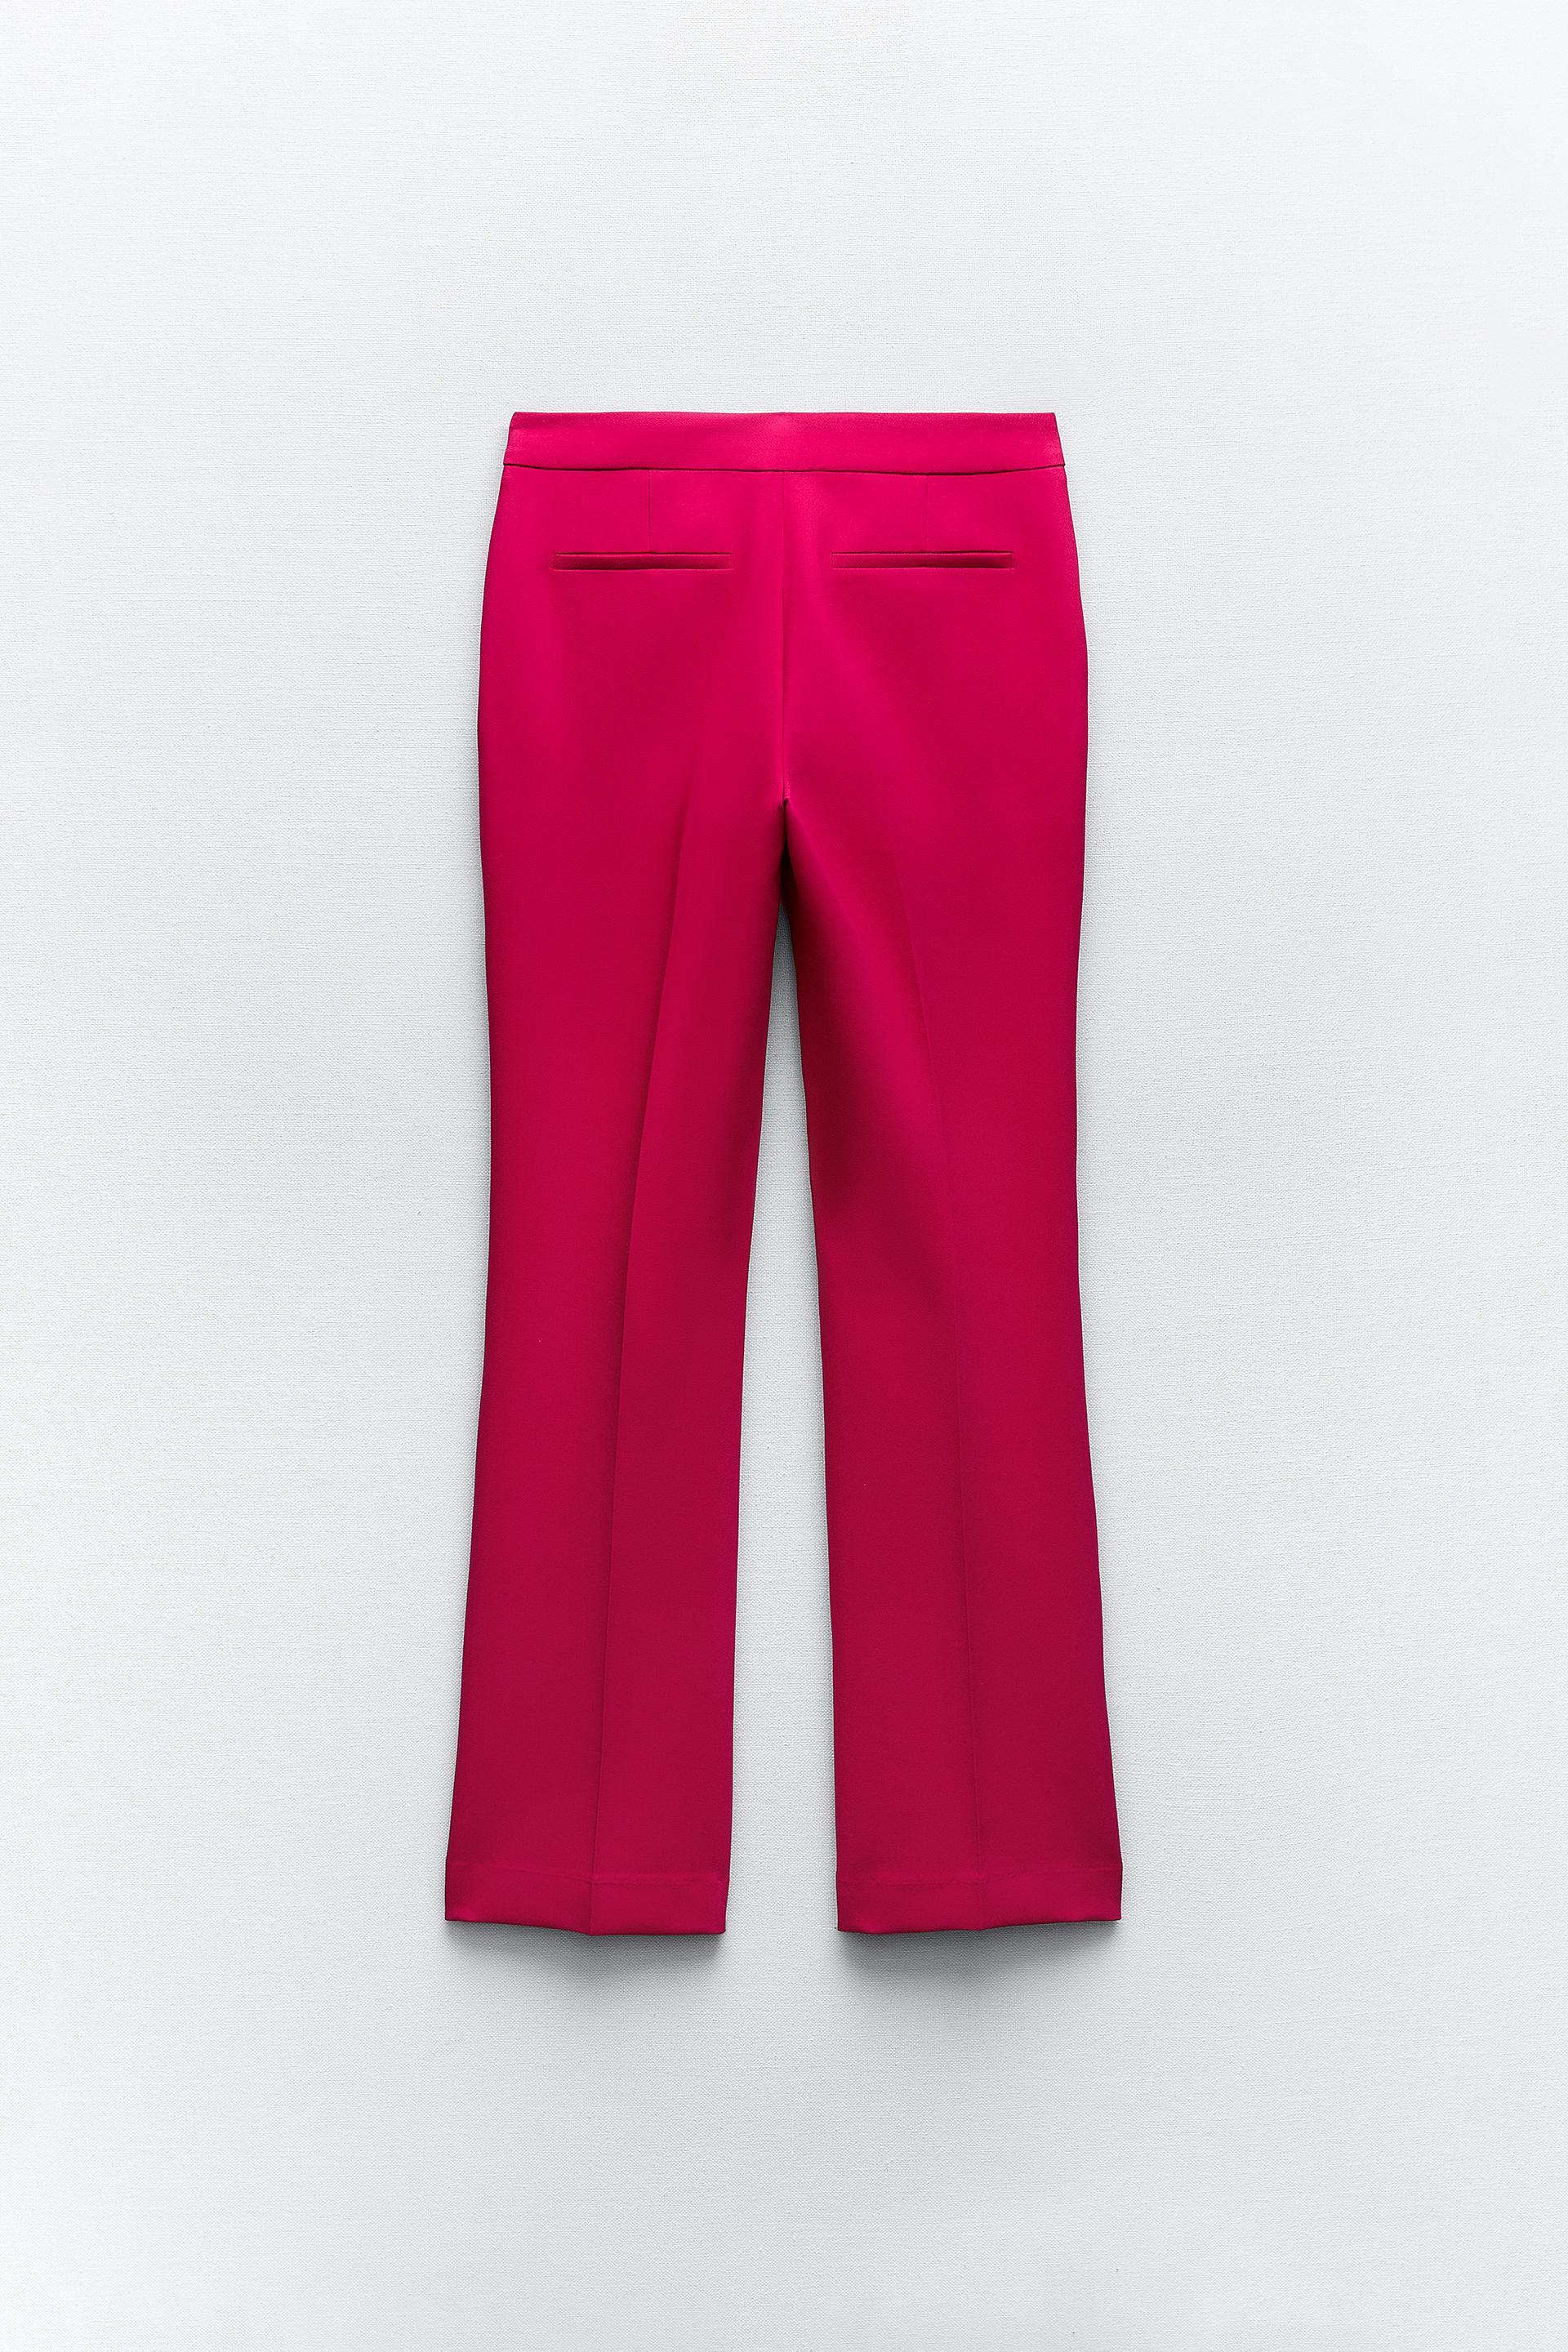 Zara, Pants & Jumpsuits, Zara Flared Satin Pants Dusty Rose Size Small  Nwt